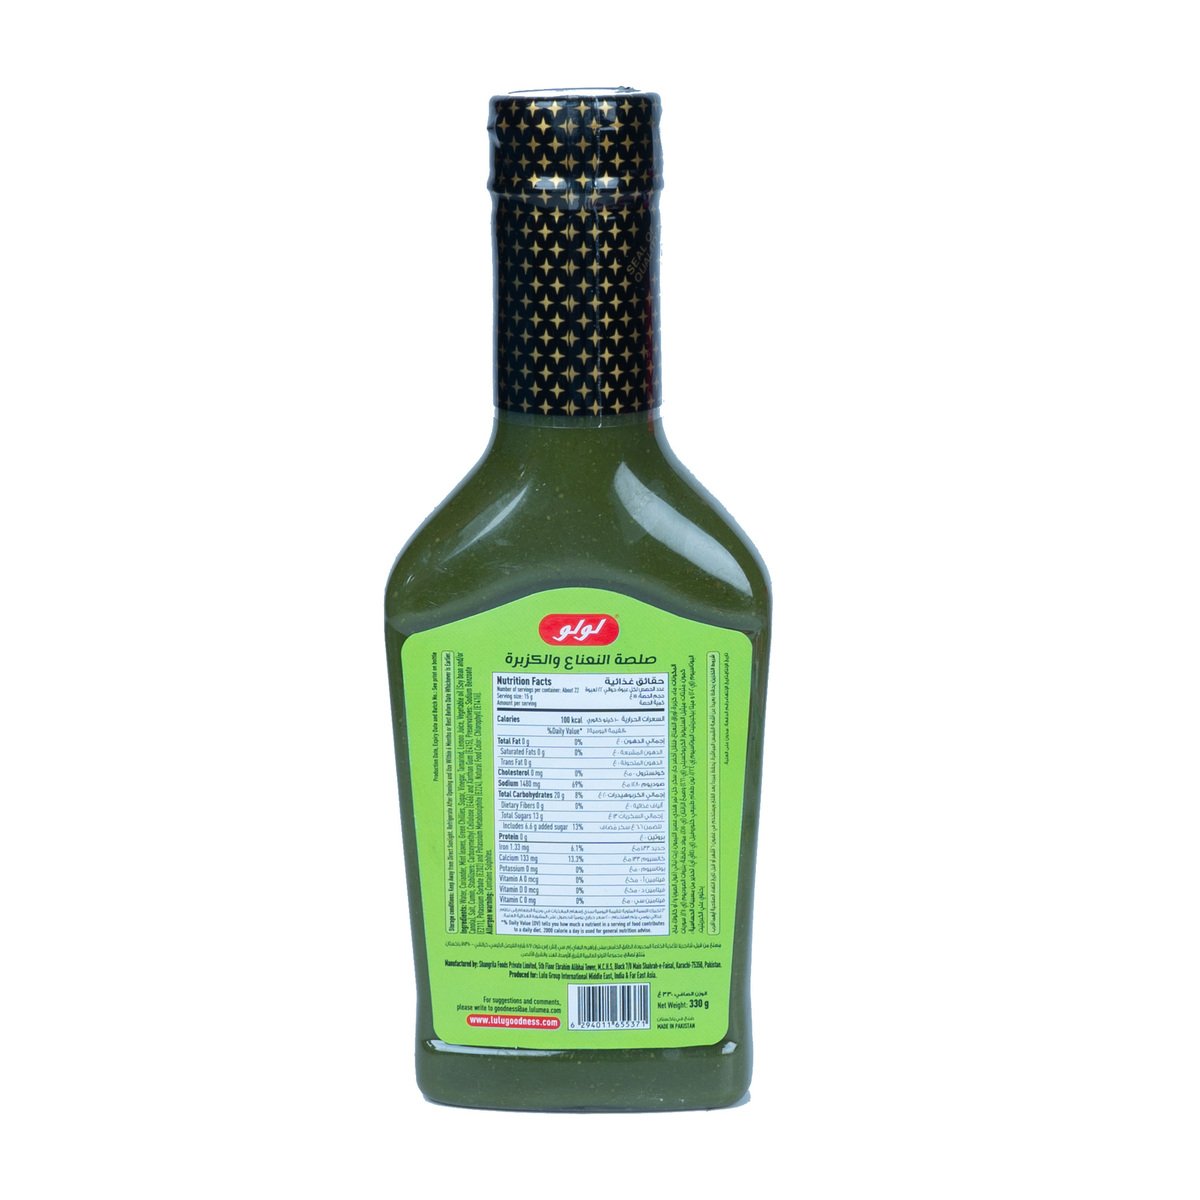 LuLu Mint Coriander Sauce 330 g